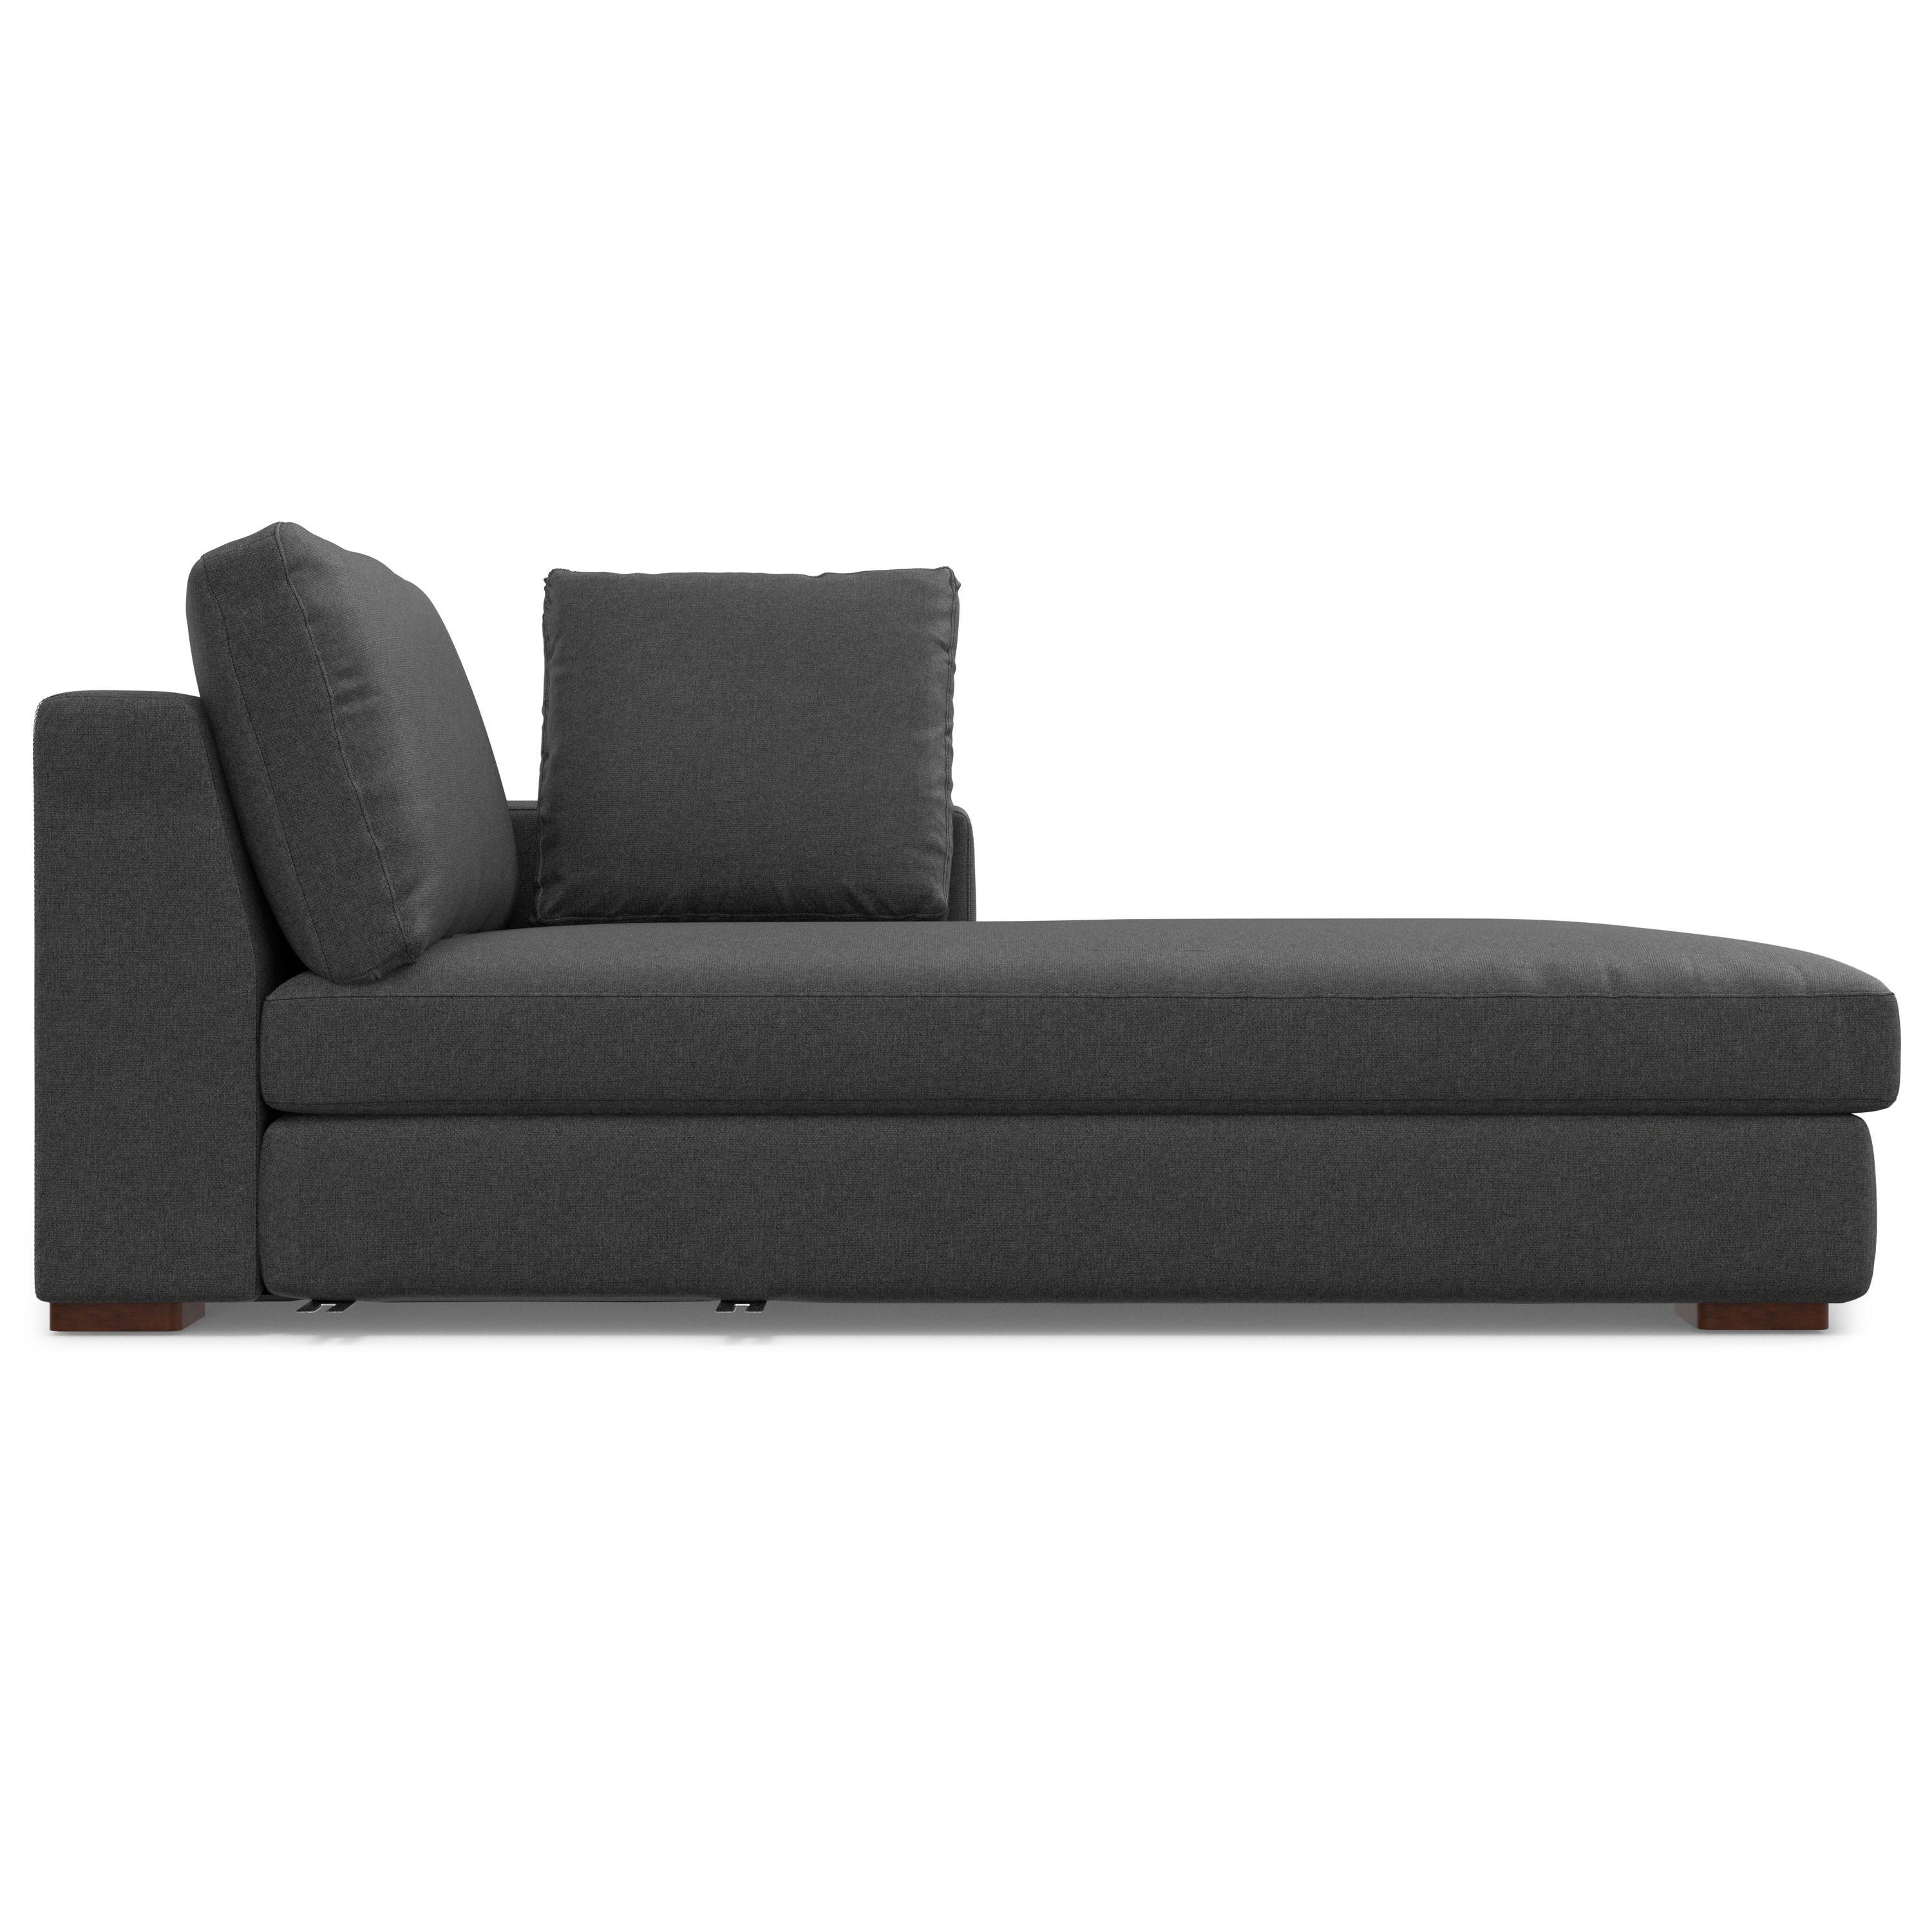 Charlie - Deep Seater Sectional Sofa